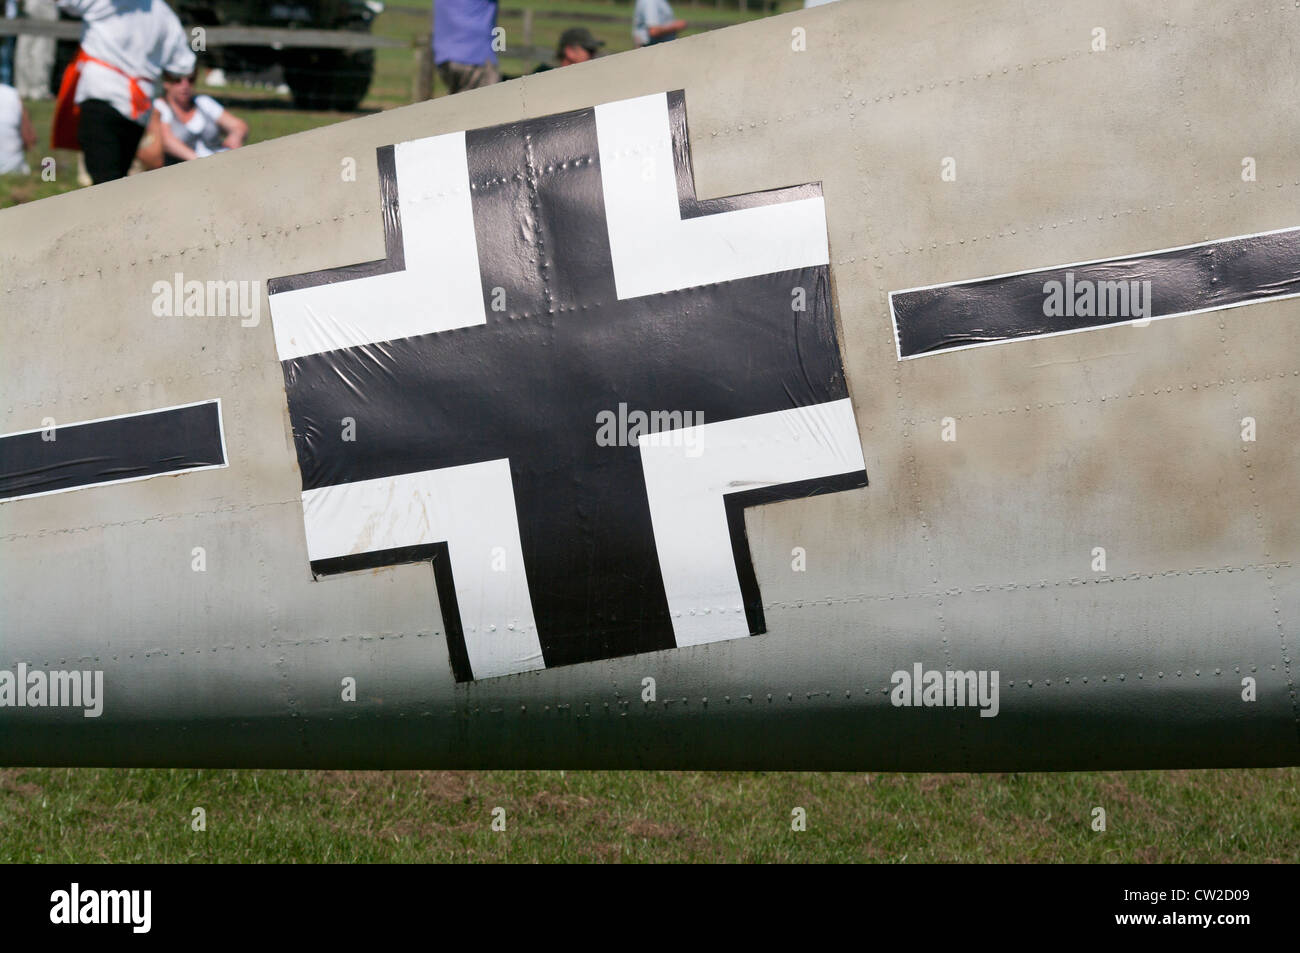 German Airforce Aircraft Cross Decal Stock Photo